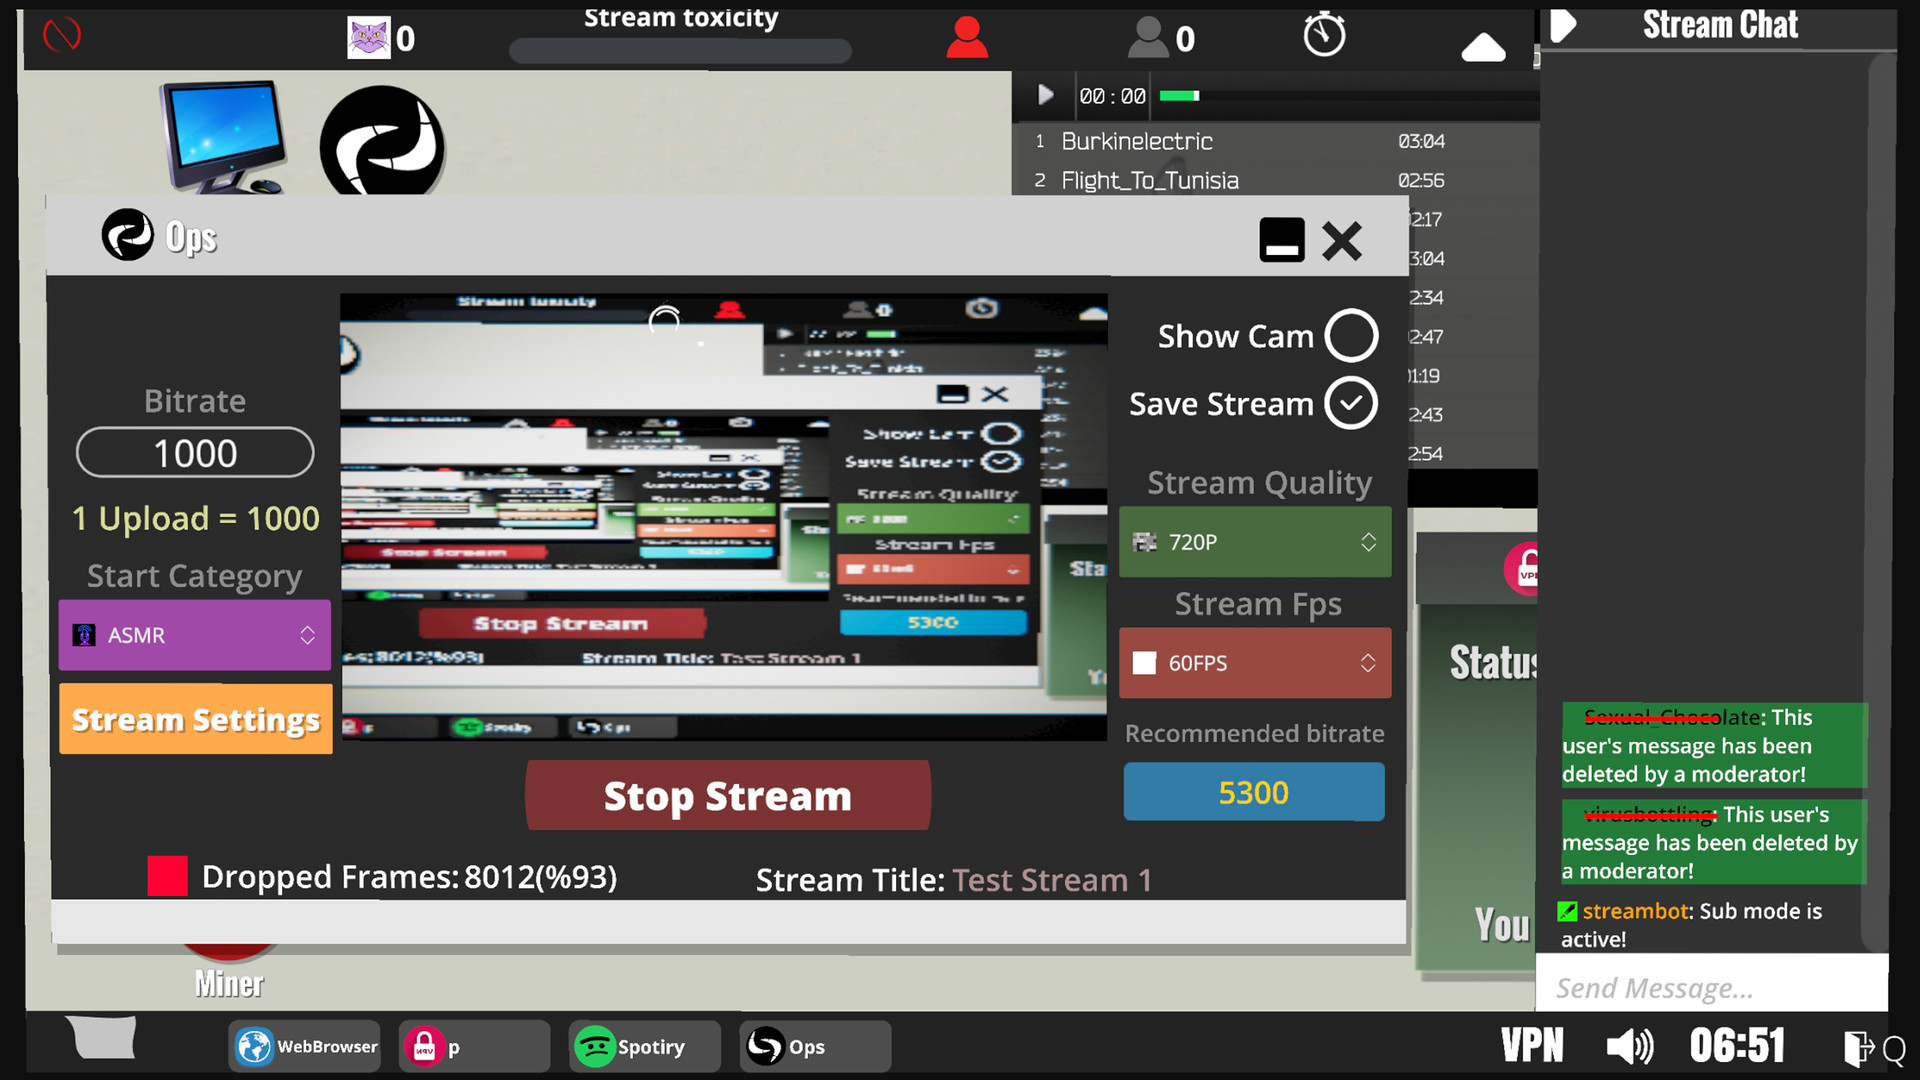 Save 20 On Streamer Life Simulator On Steam - hack roblox sprinting simulator 2